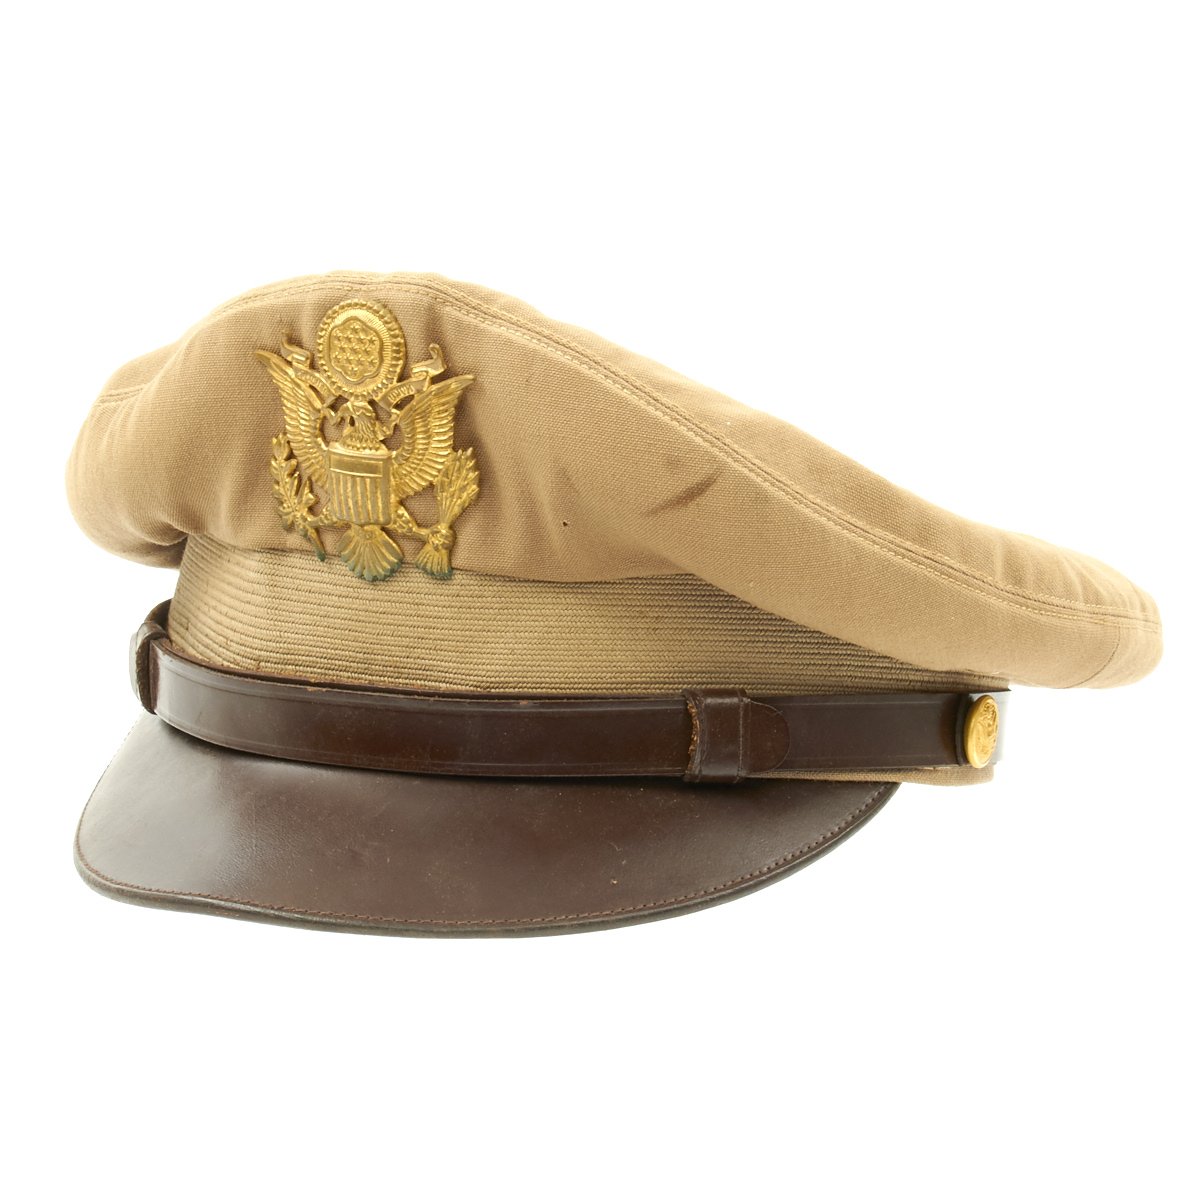 khaki peaked cap